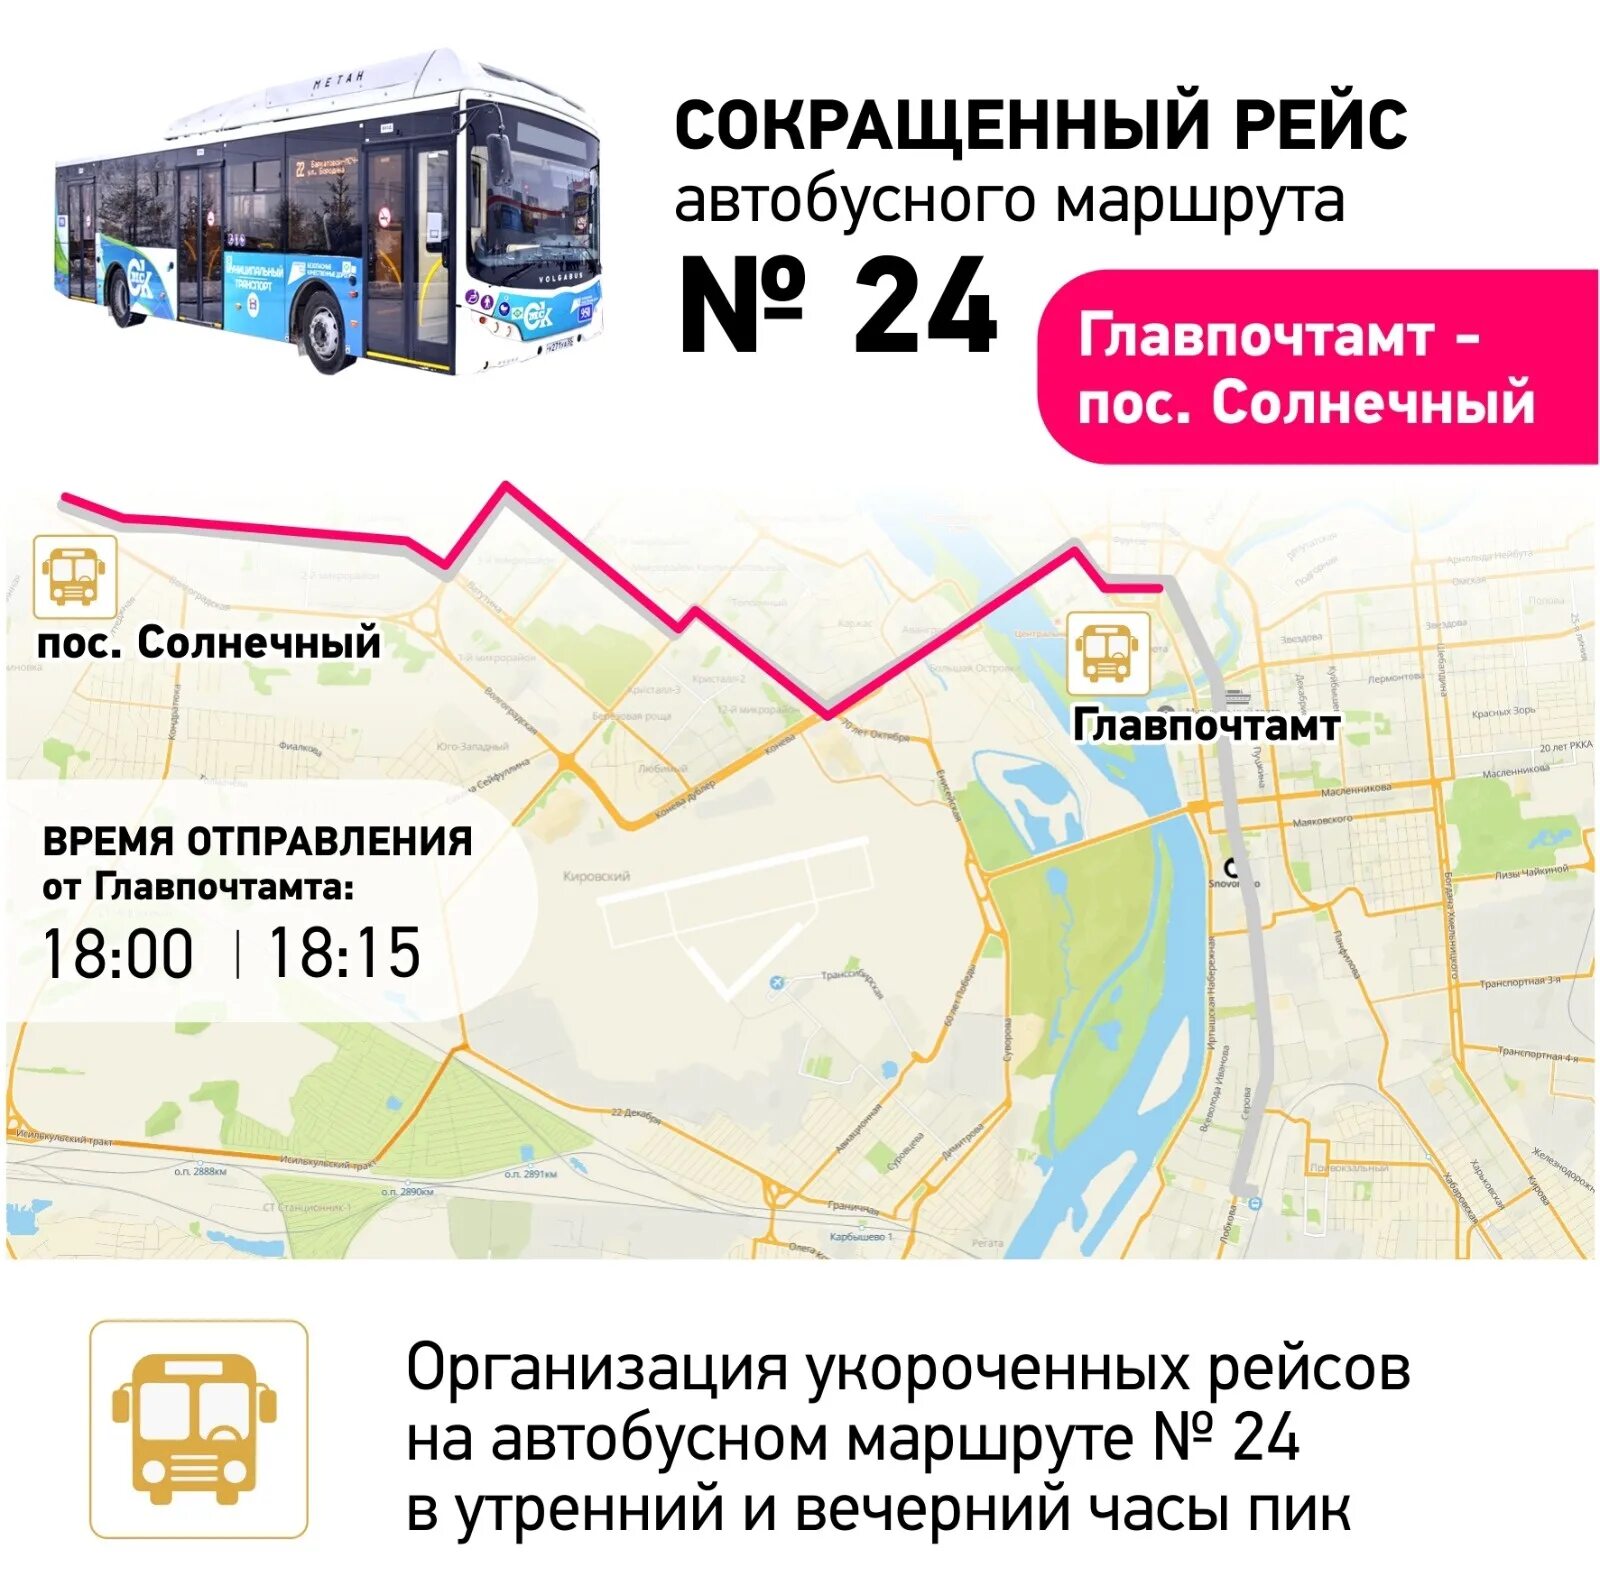 Т 24 маршрут. Маршруты общественного транспорта. Автобус Омск. Маршрут 24 автобуса. Хема движения общественного транспорта в Омске.